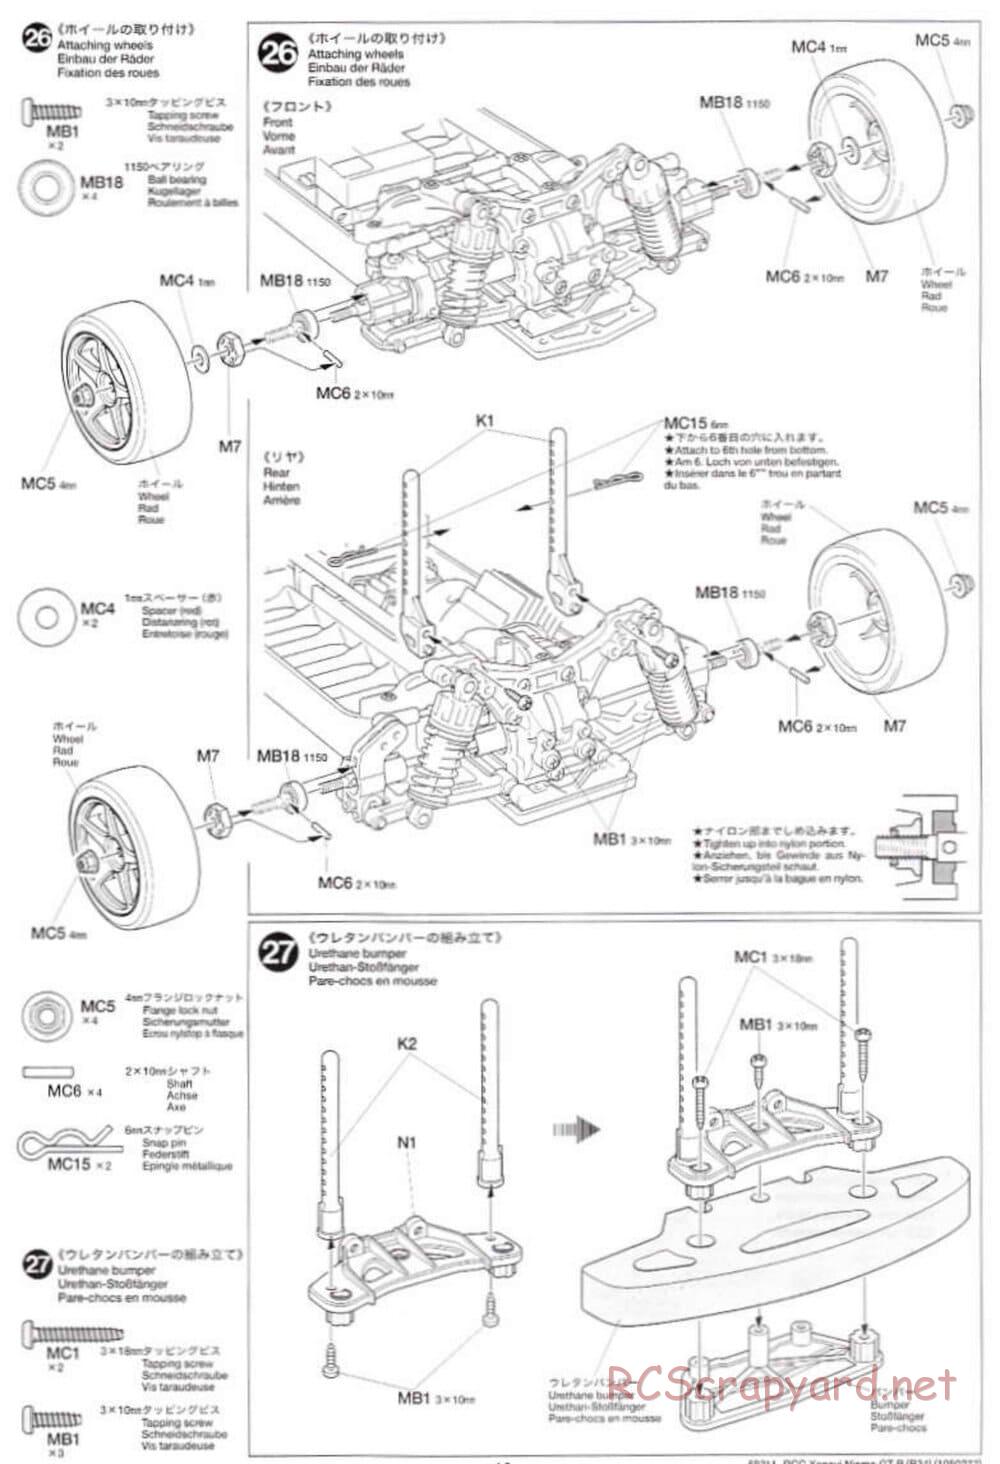 Tamiya - Xanavi Nismo GT-R (R34) - TB-02 Chassis - Manual - Page 16